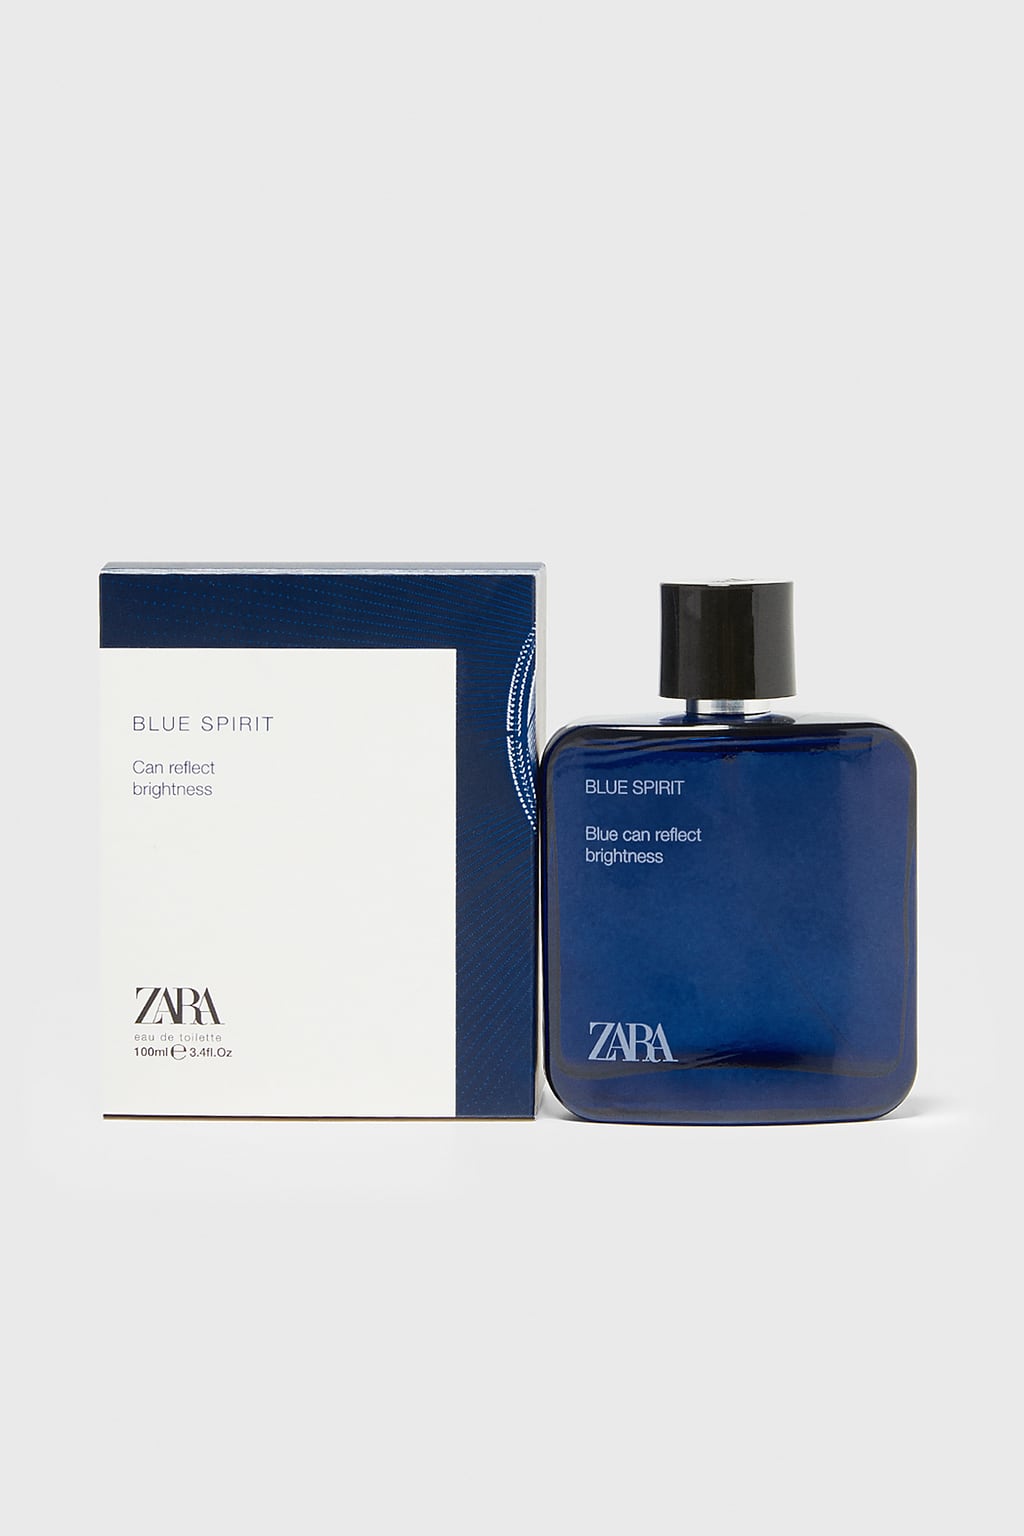 Blue Spirit Zara cologne - a new 